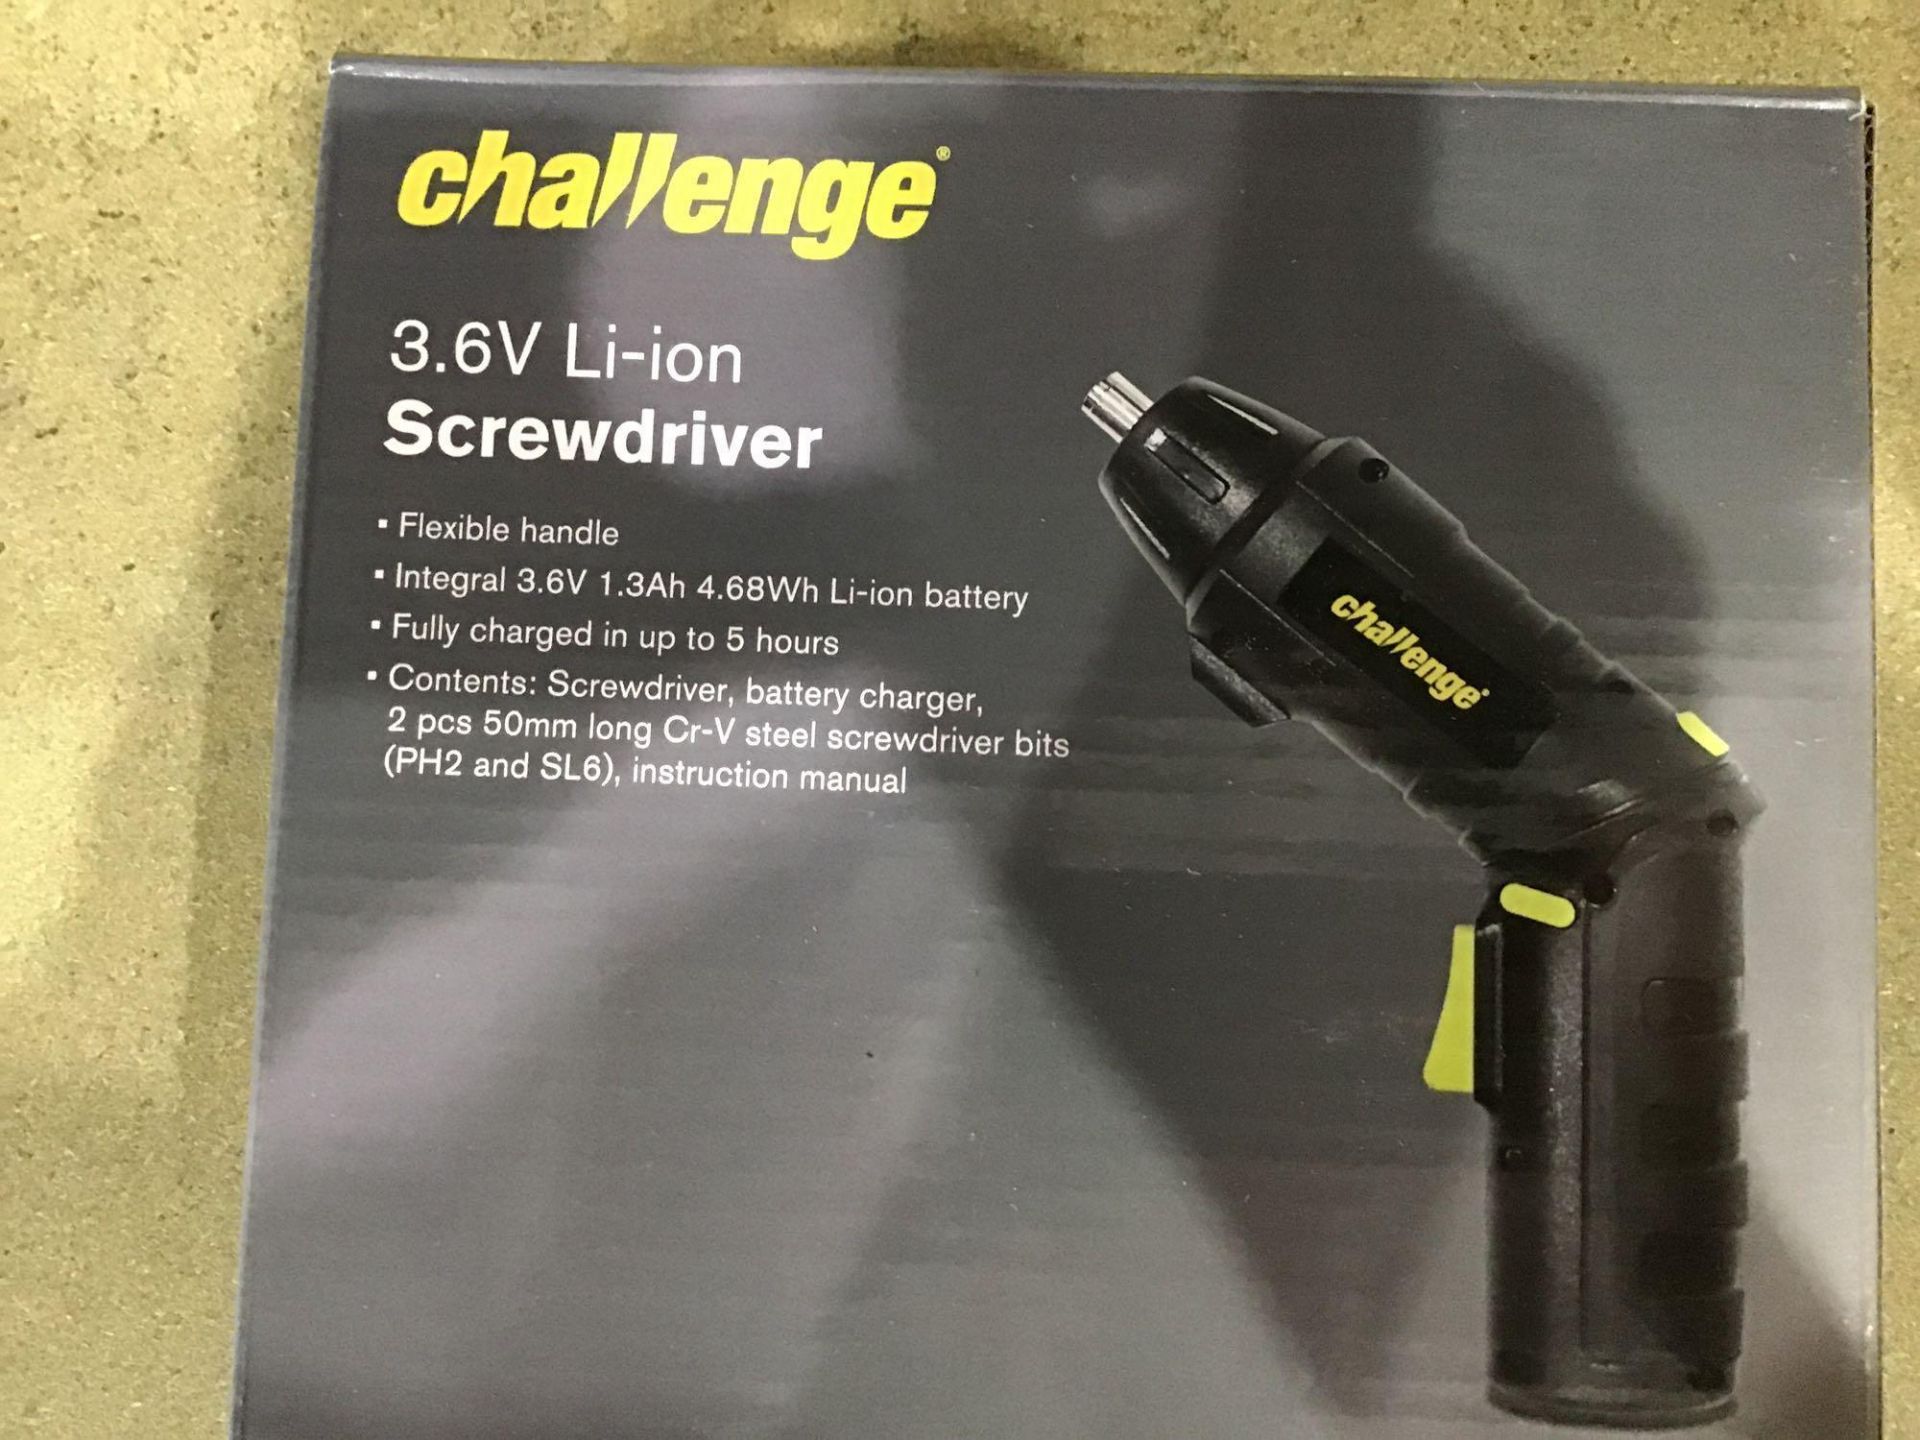 Challenge Cordless Screwdriver - 3.6V - £10.00 RRP - Image 2 of 3